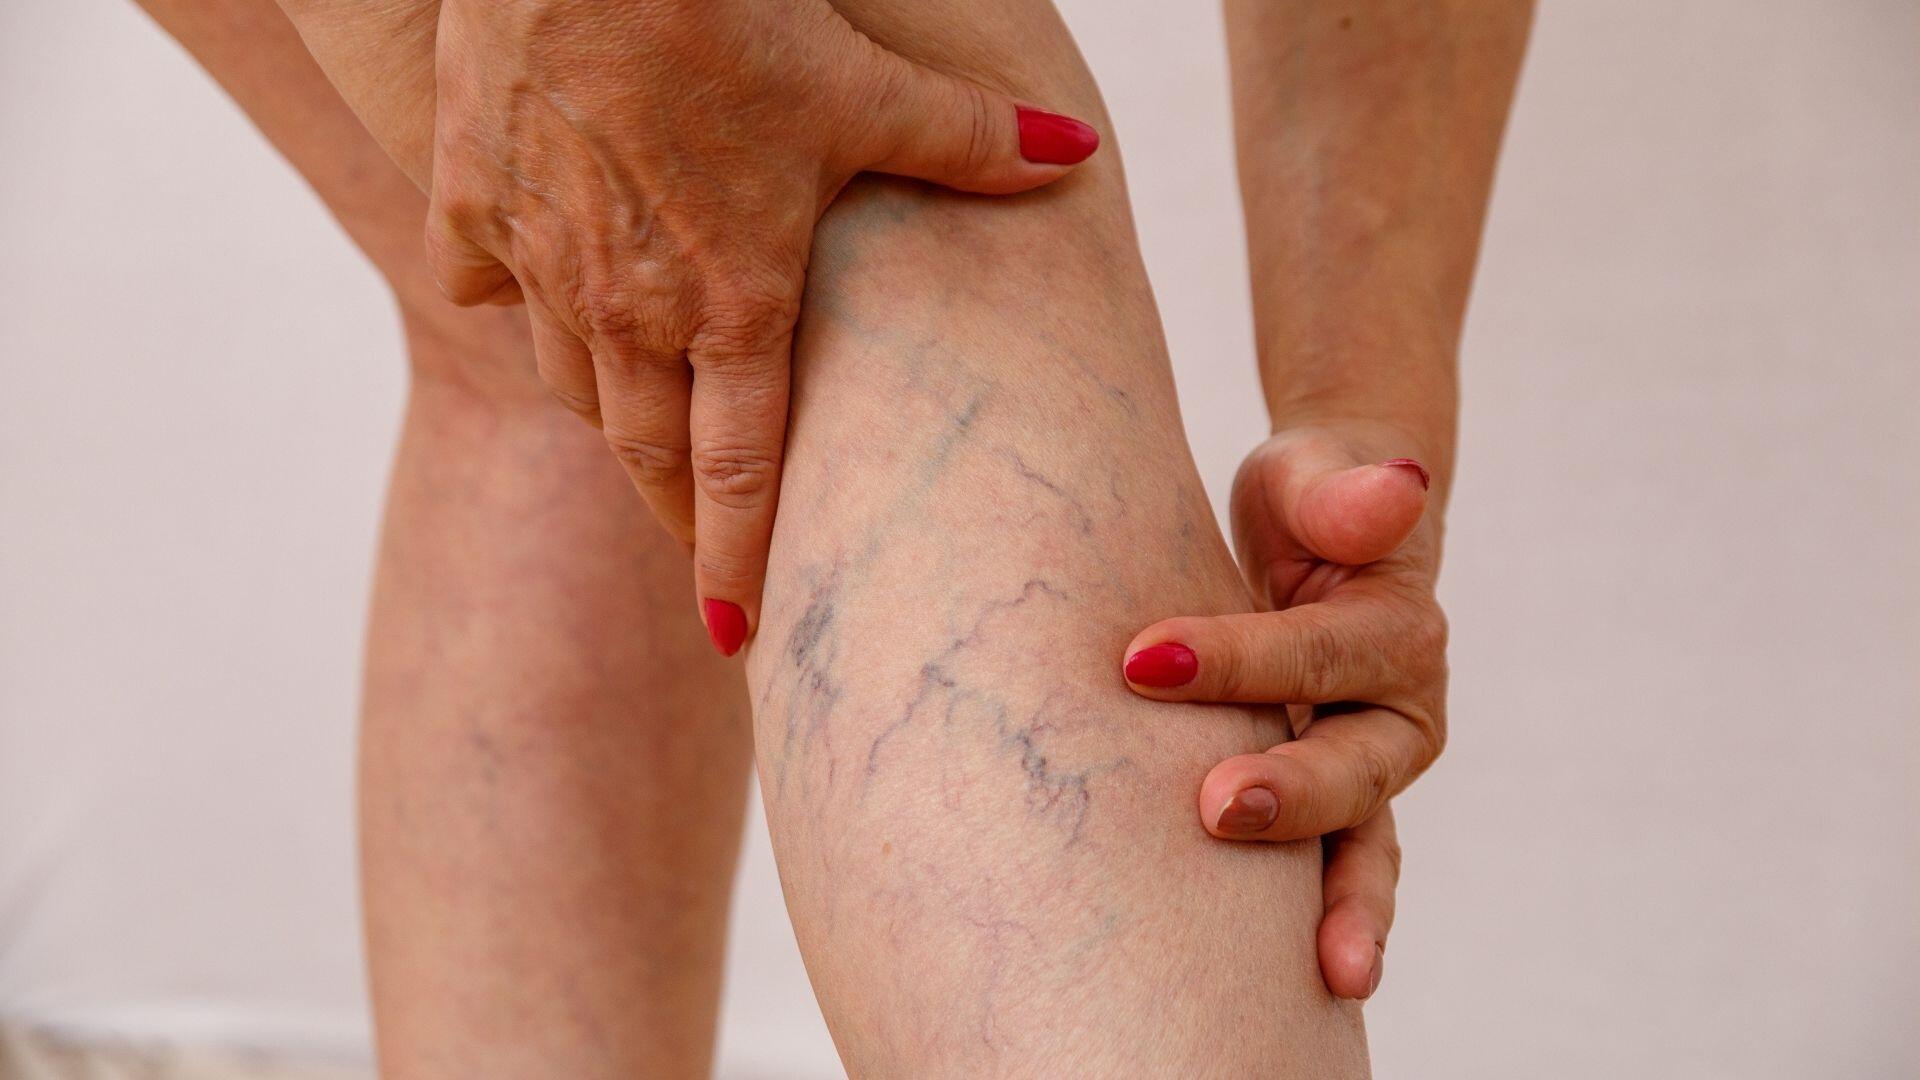 spider-vein-treatment-leg-pain